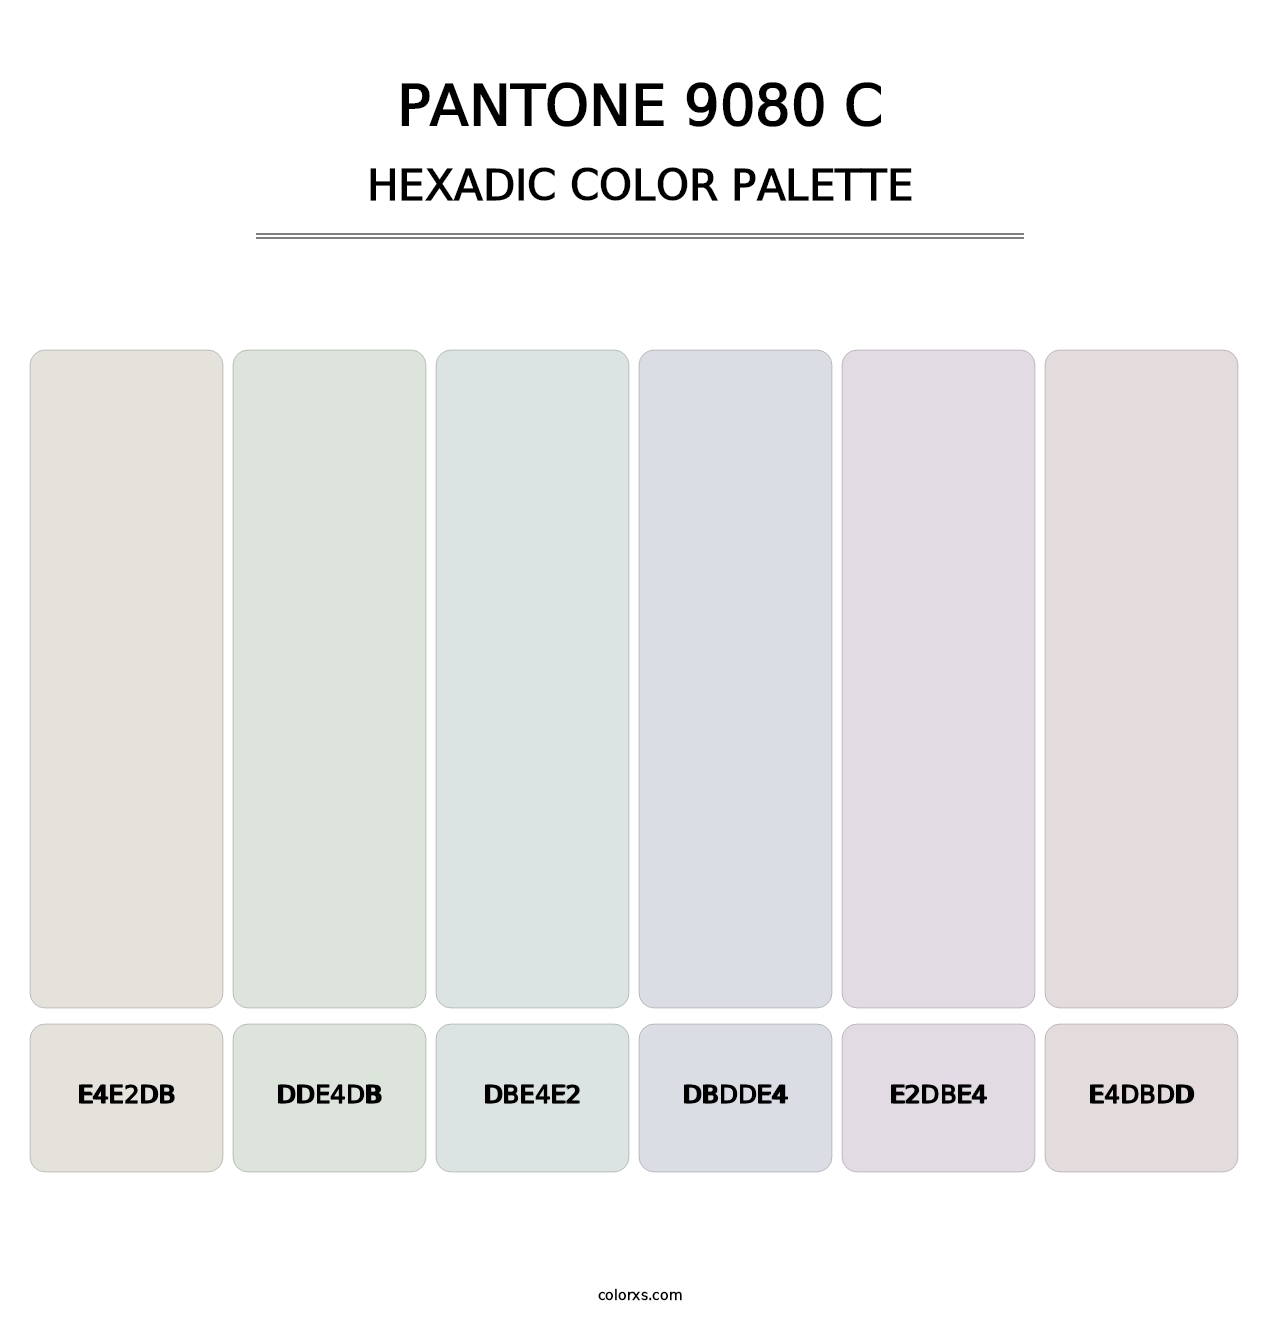 PANTONE 9080 C - Hexadic Color Palette